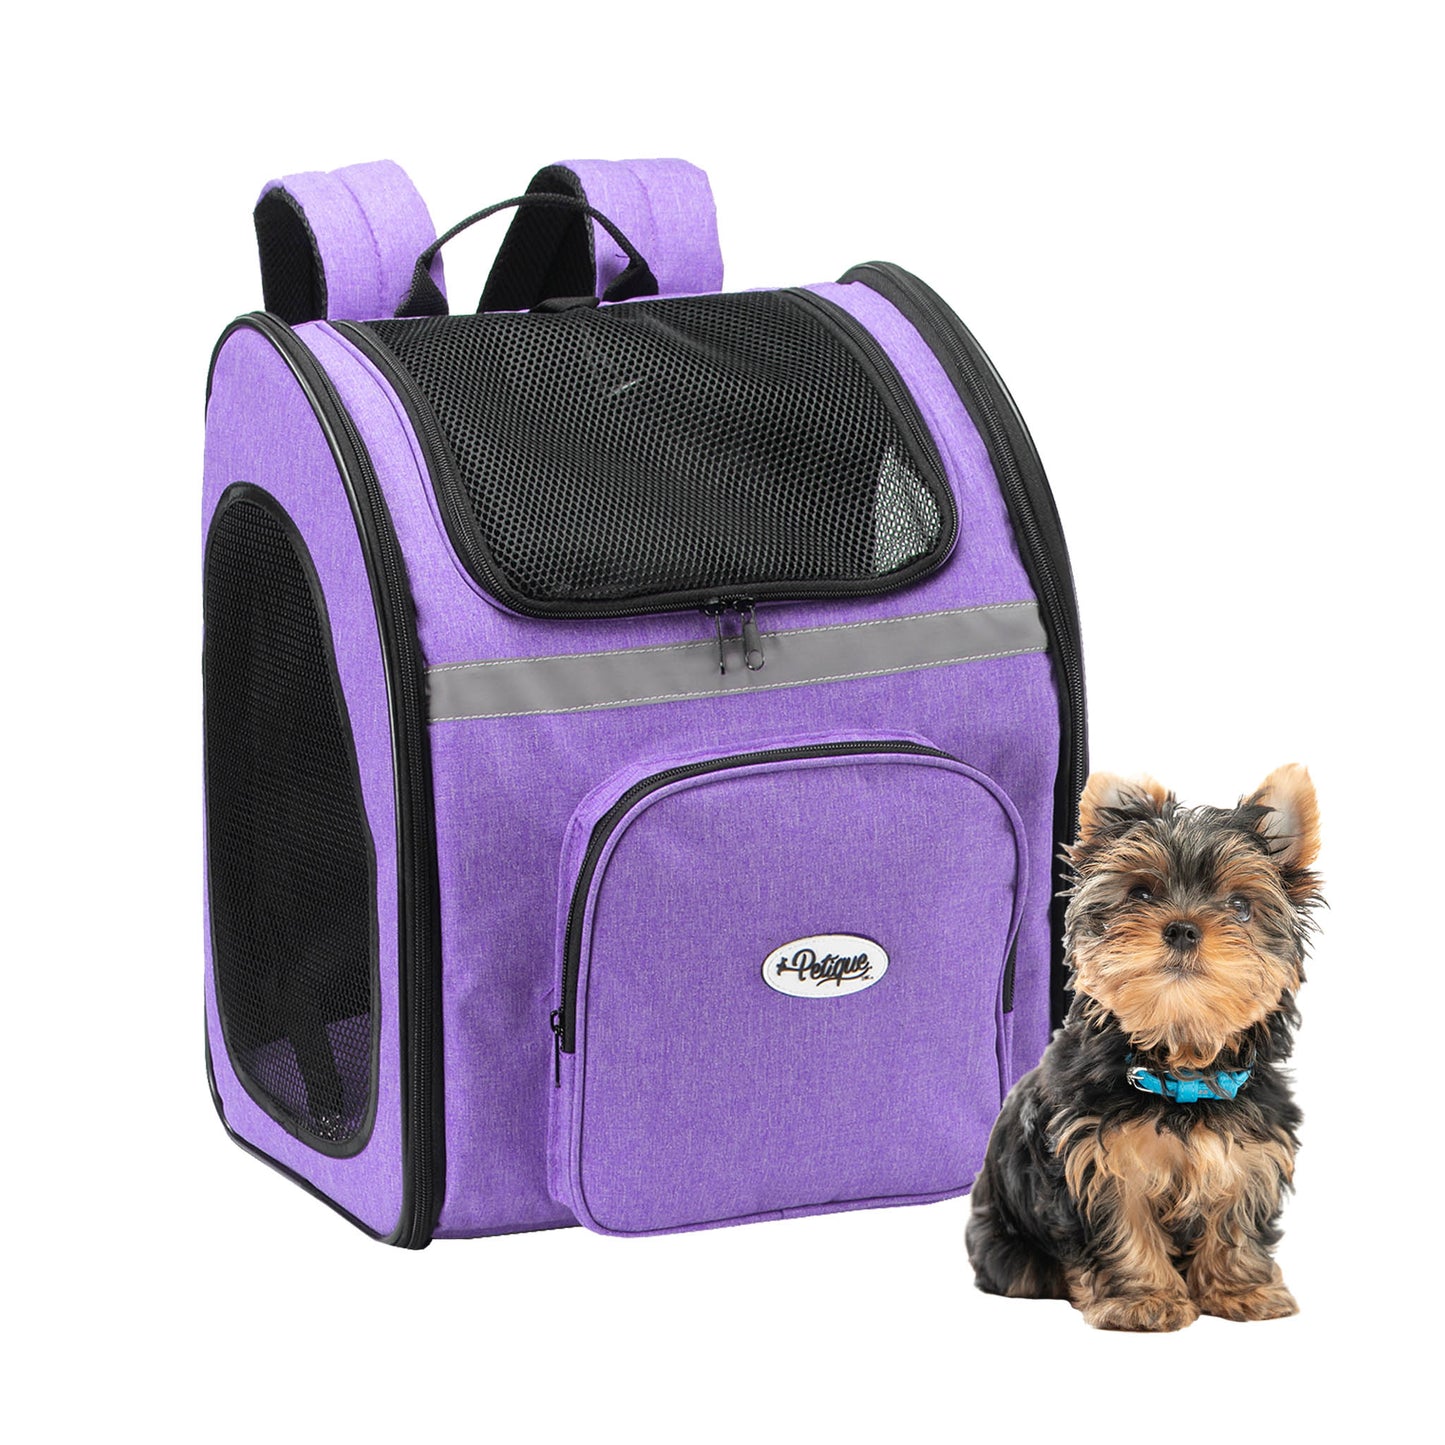 The Backpacker Pet Carrier